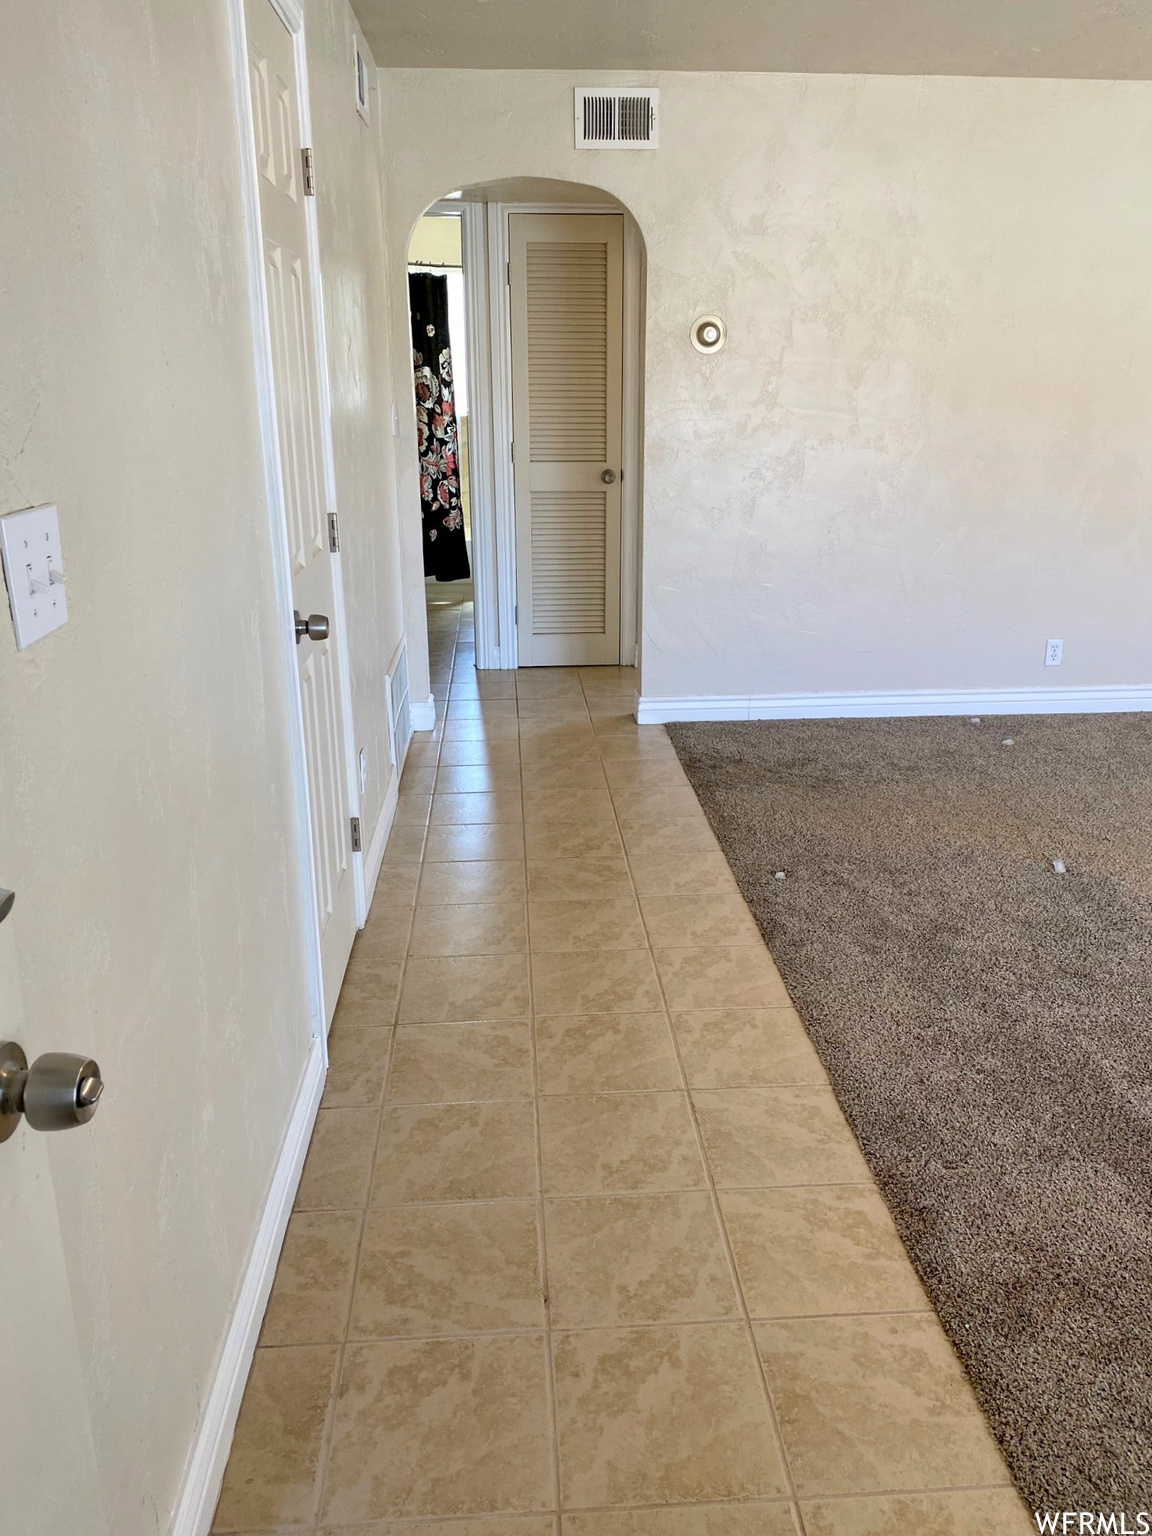 Corridor featuring tile walkway and carpet in living room